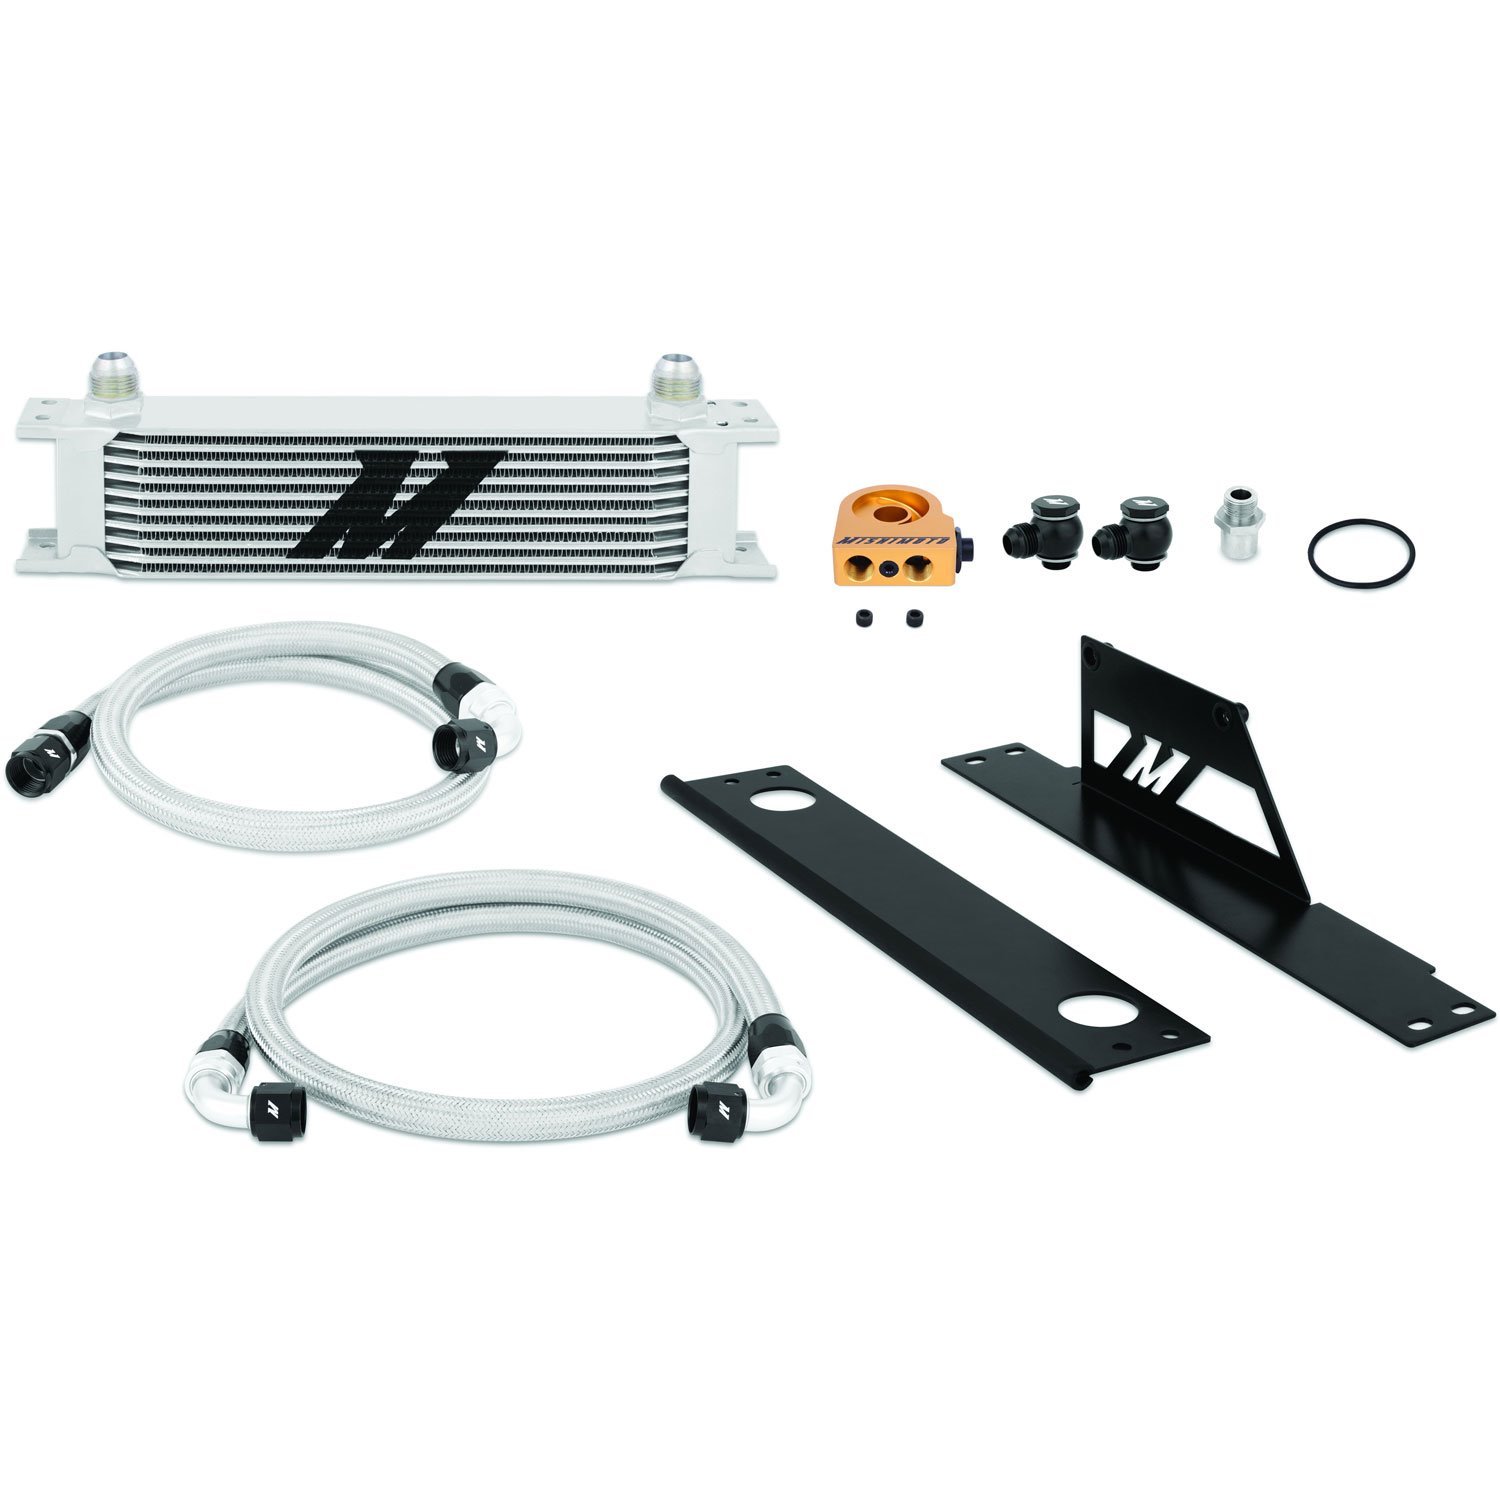 Subaru WRX and STI Thermostatic Oil Cooler Kit - MFG Part No. MMOC-WRX-01T